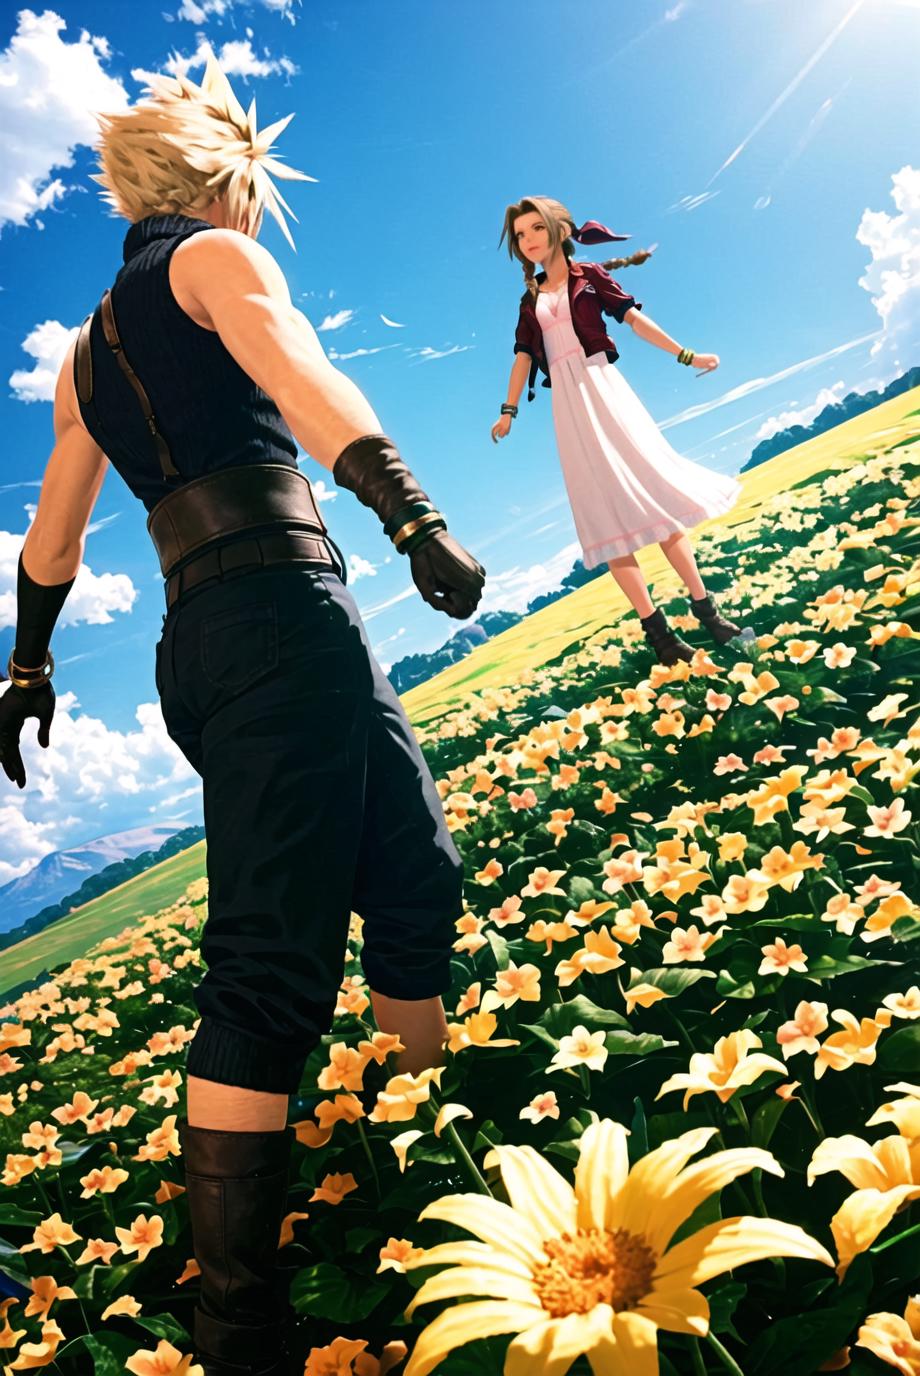 Final Fantasy VII Remake Style (Unreal Engine 4) LoRA image by Lykon